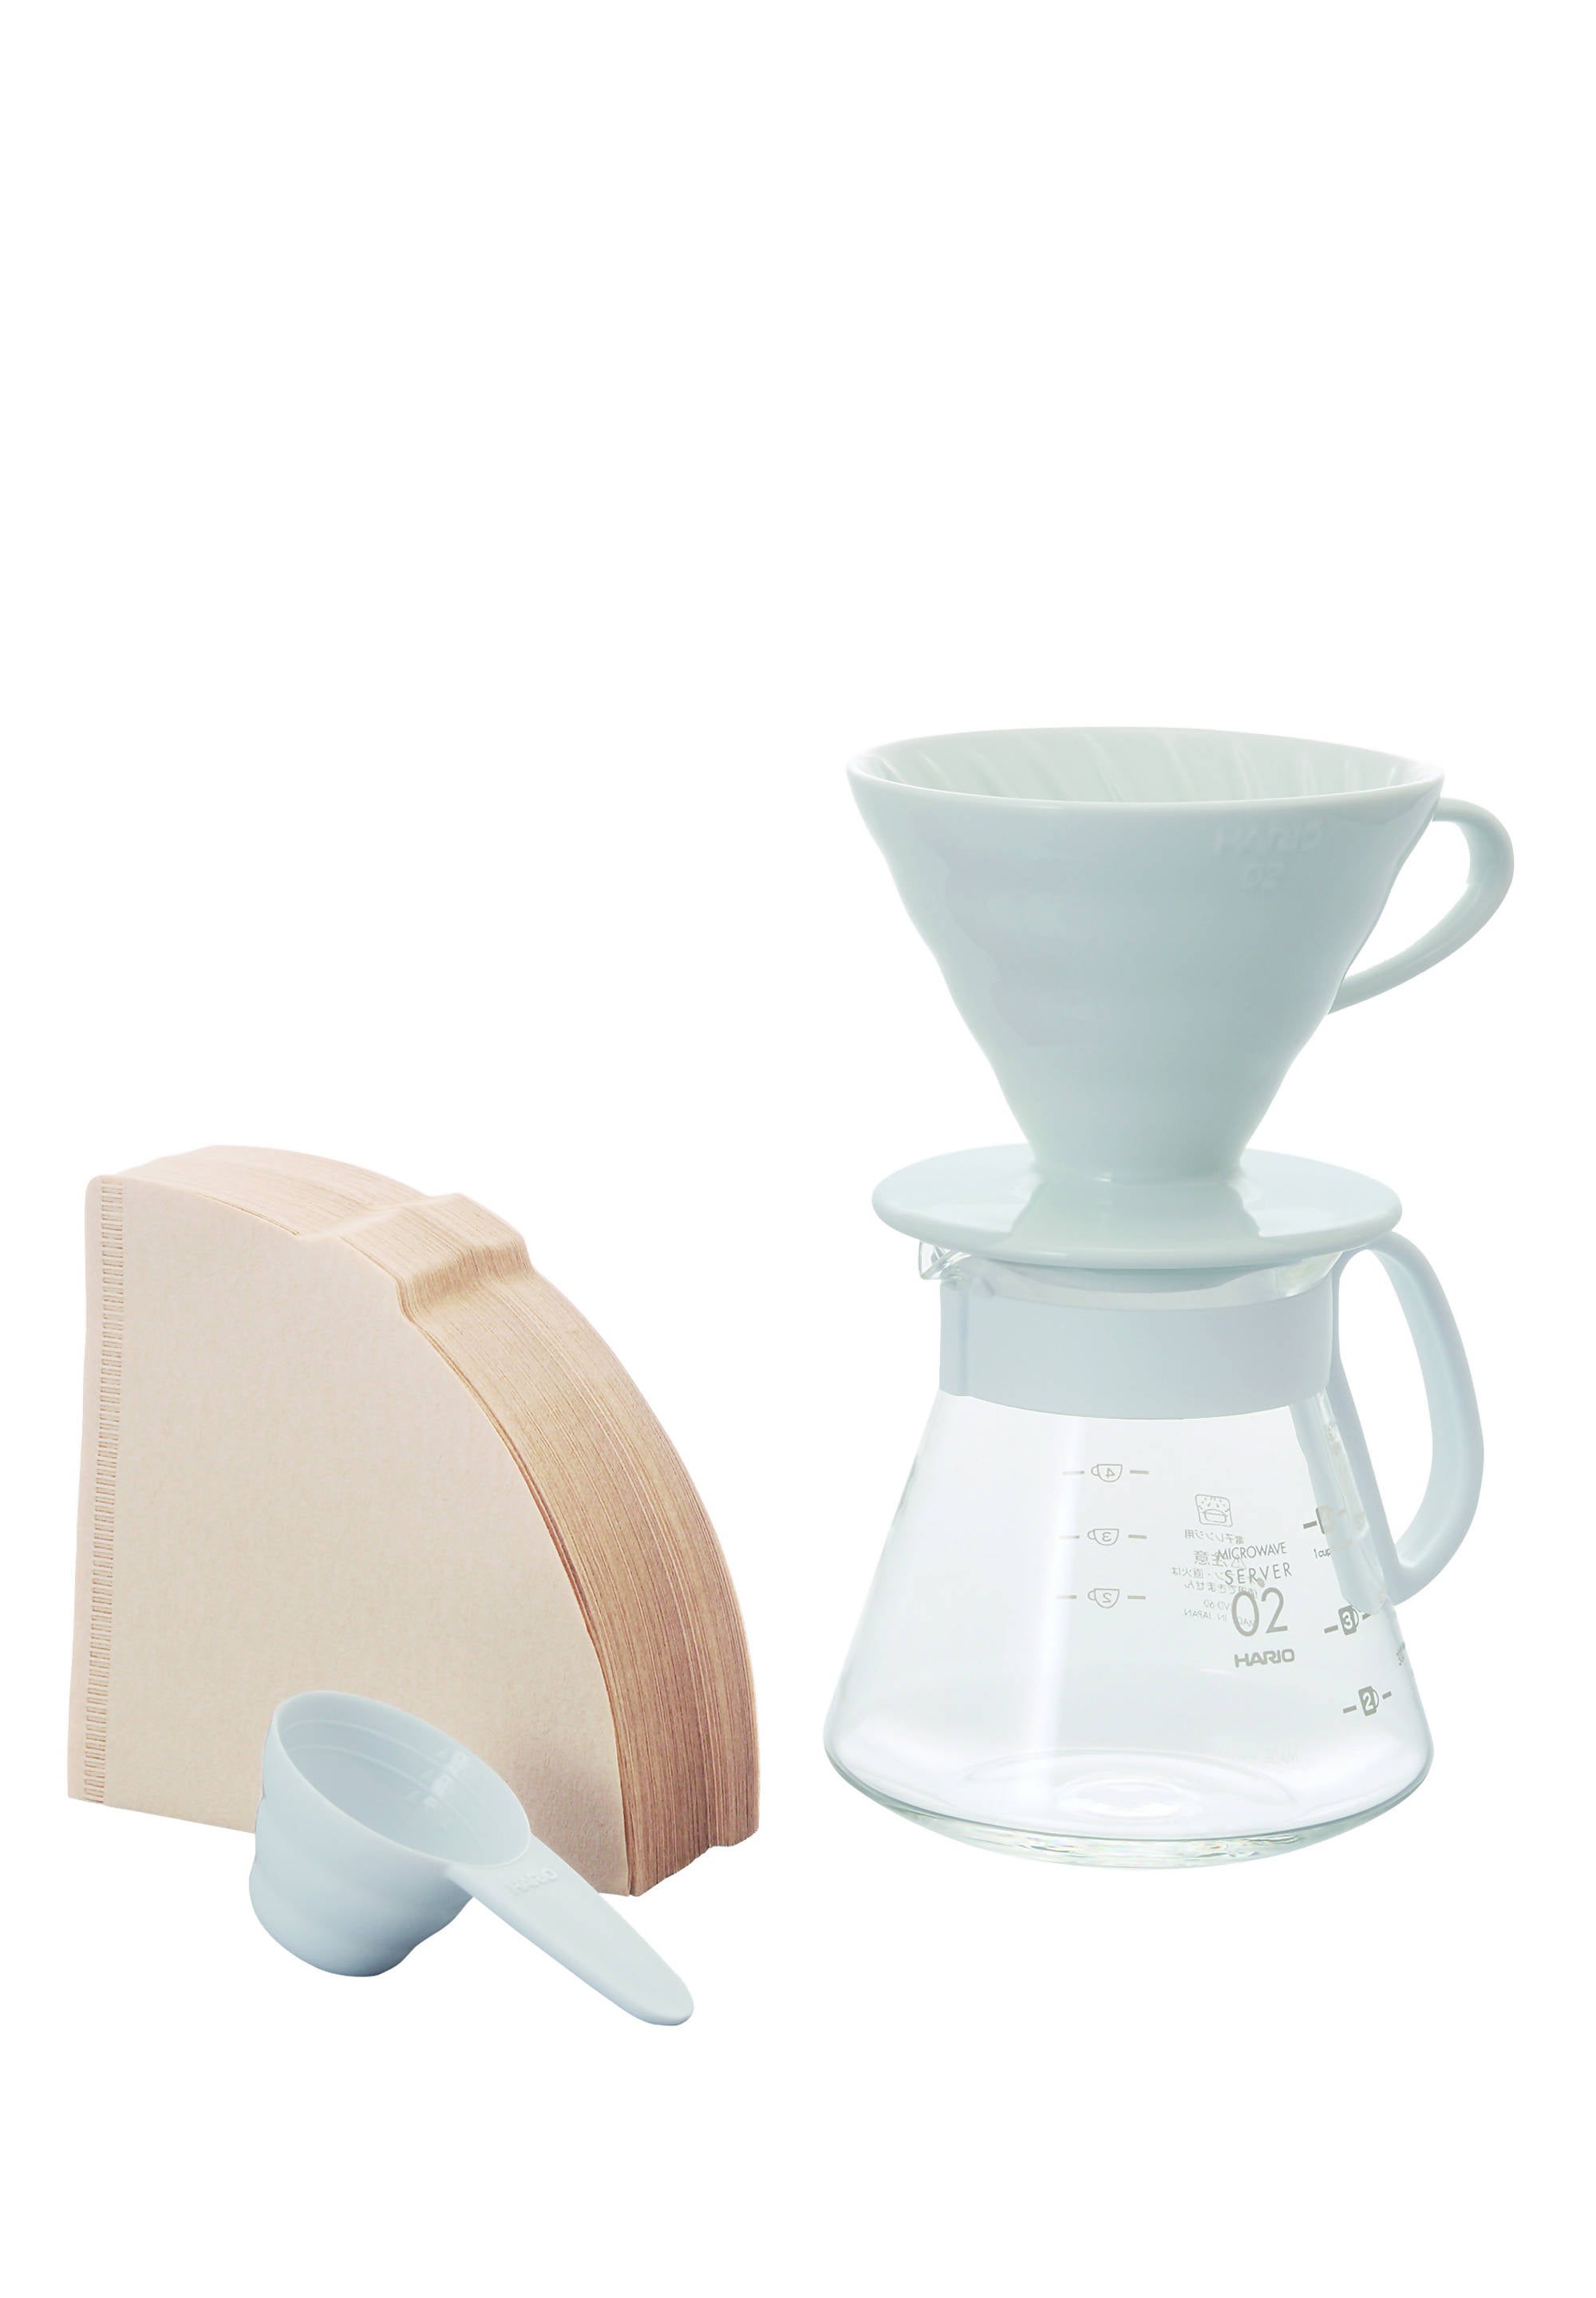 Hario V60 - 02 Ceramic Pot Set - White - BeanBurds CoffeeDesk